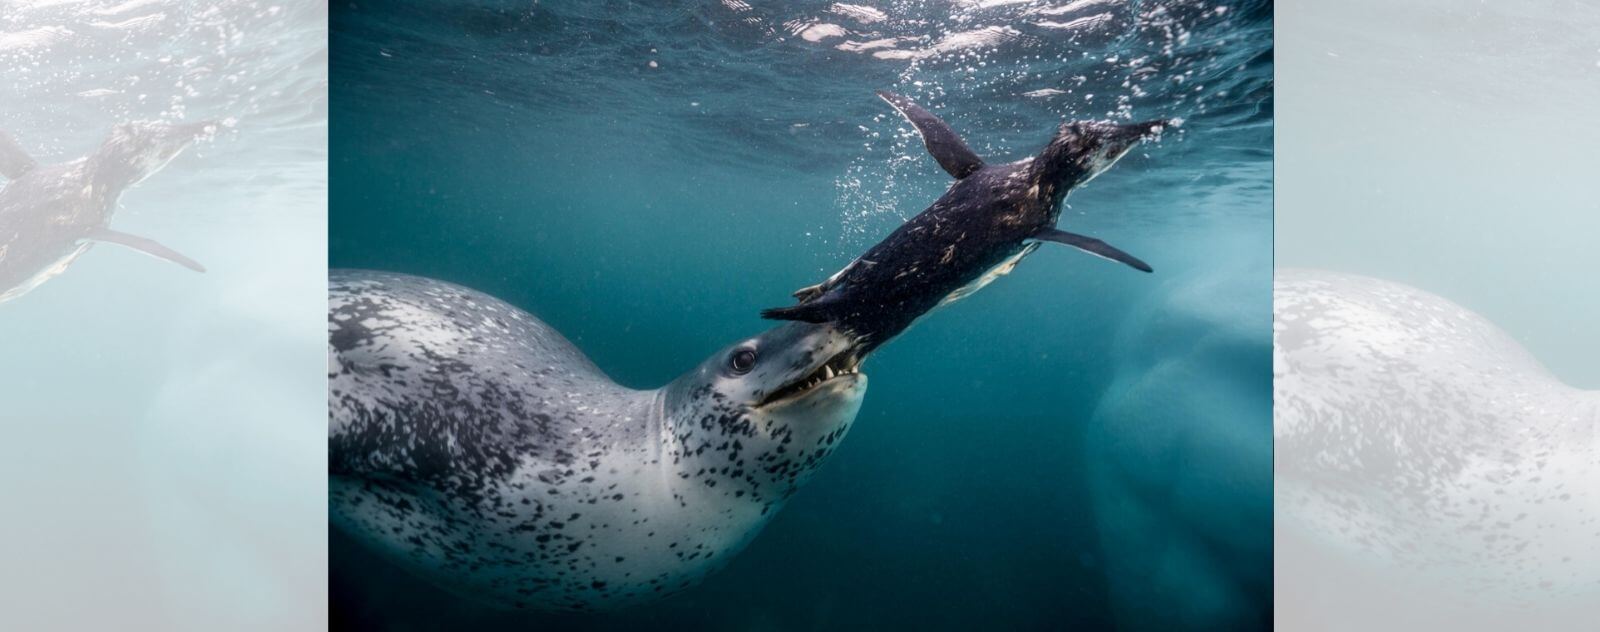 Sea Leopard Eating a Penguin